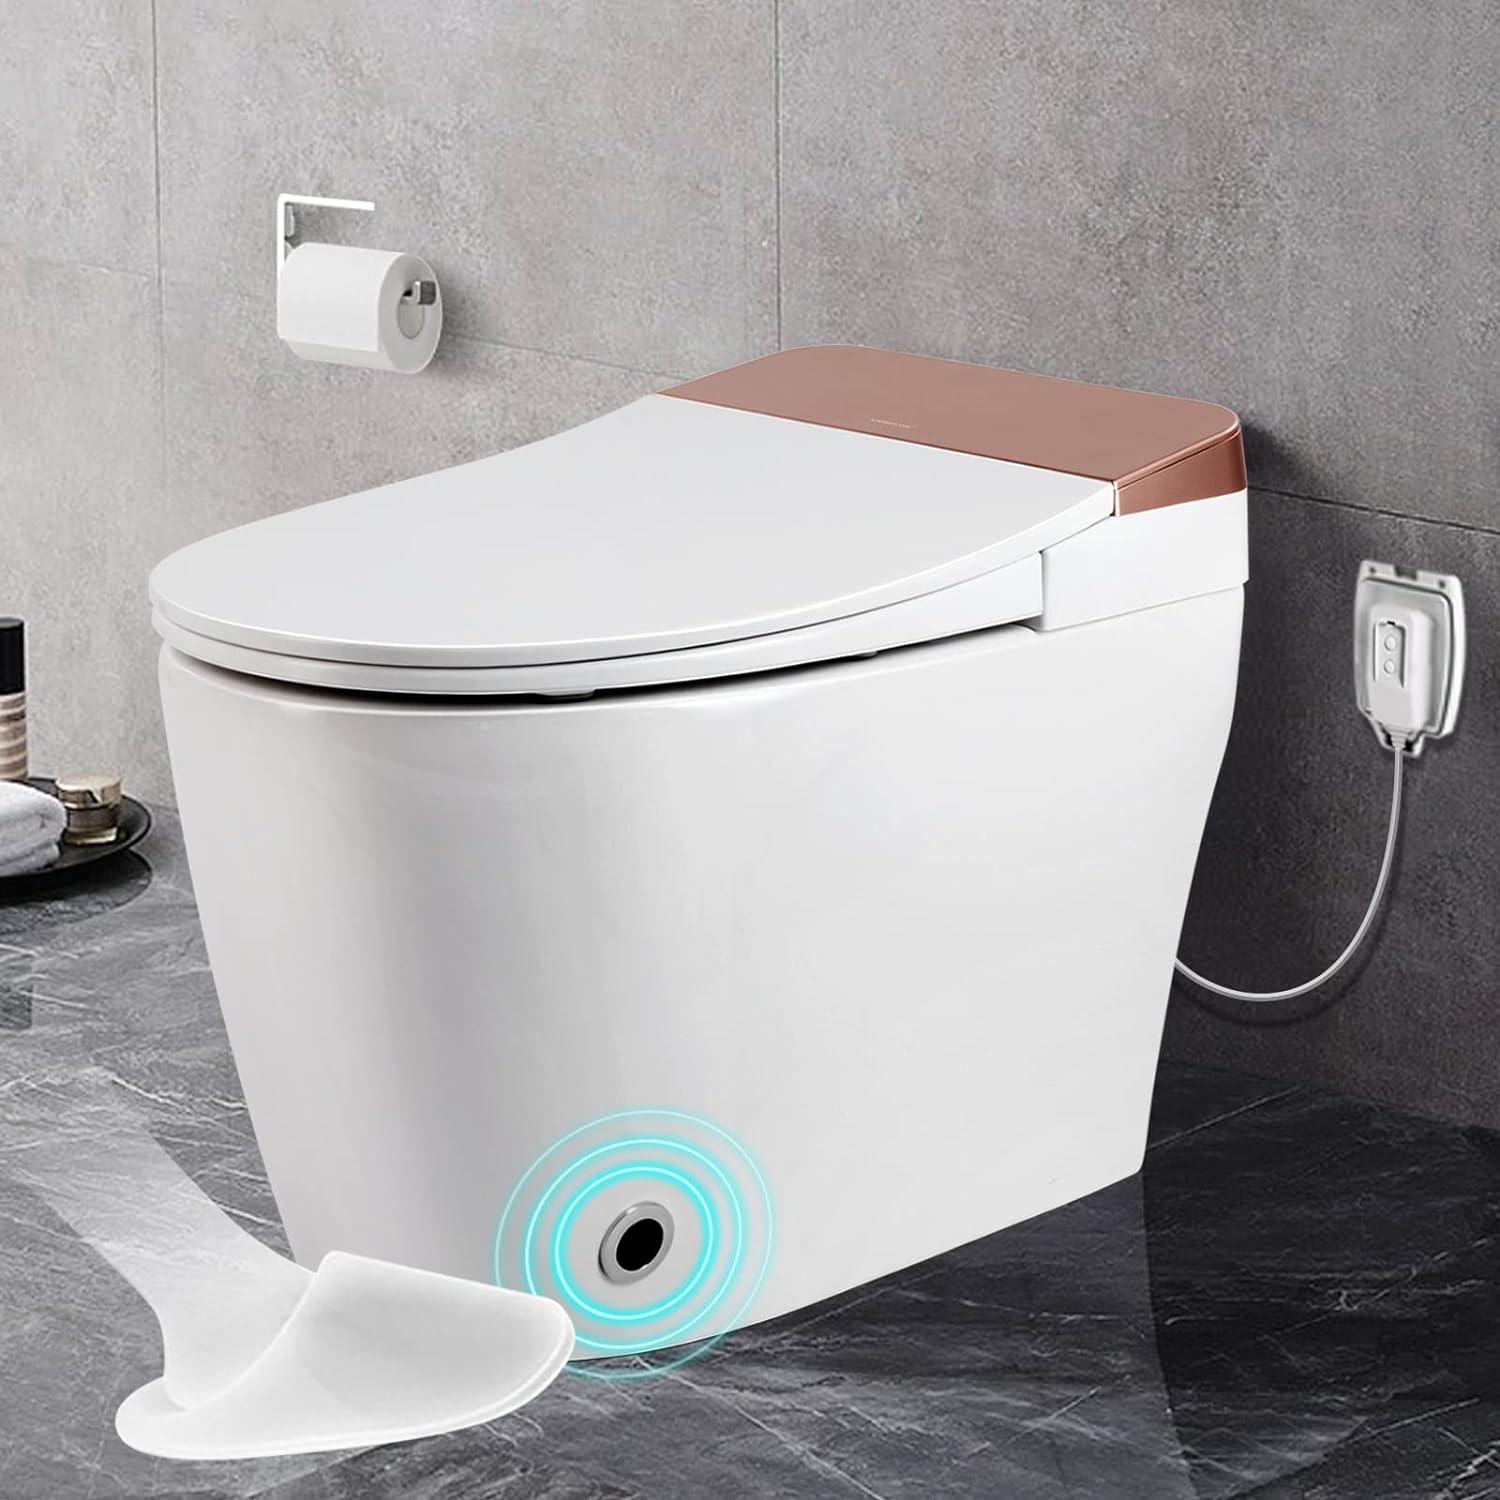 Cosvalve Smart Toilet, Heated Seat, Foot Sensor Flush, Automatic Powerful Flush, Tankless Toilet without Bidet, Knob Control White Night Light, Power Outage Flushing